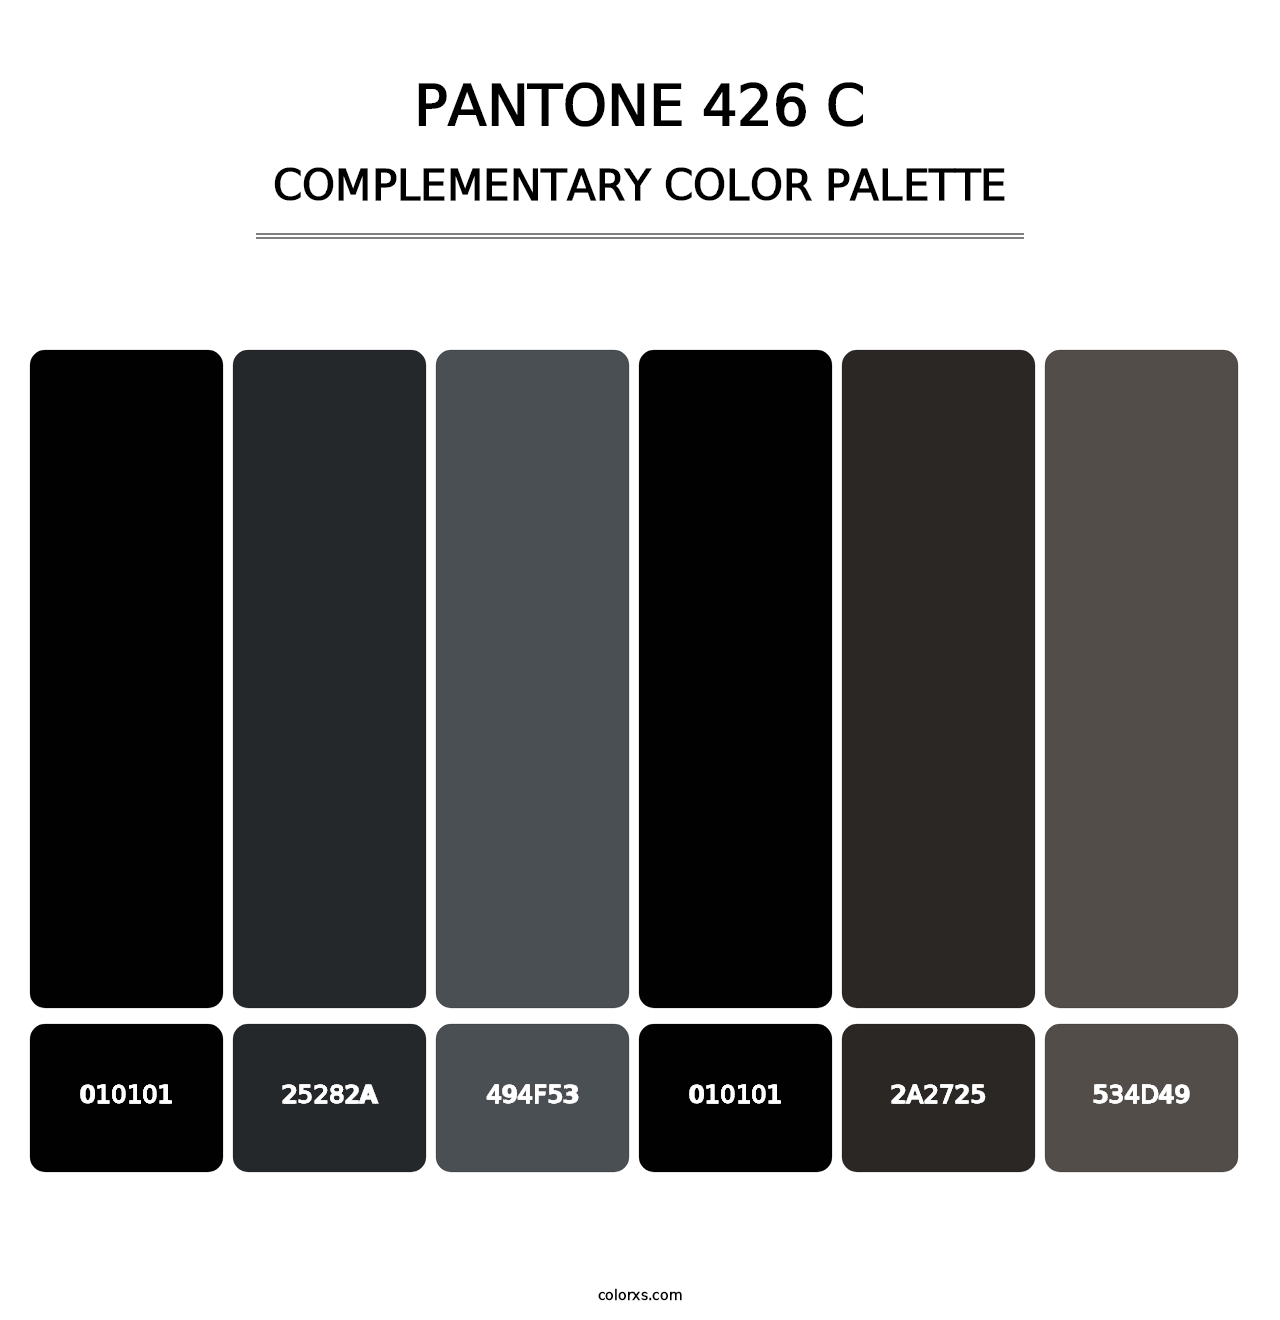 PANTONE 426 C - Complementary Color Palette